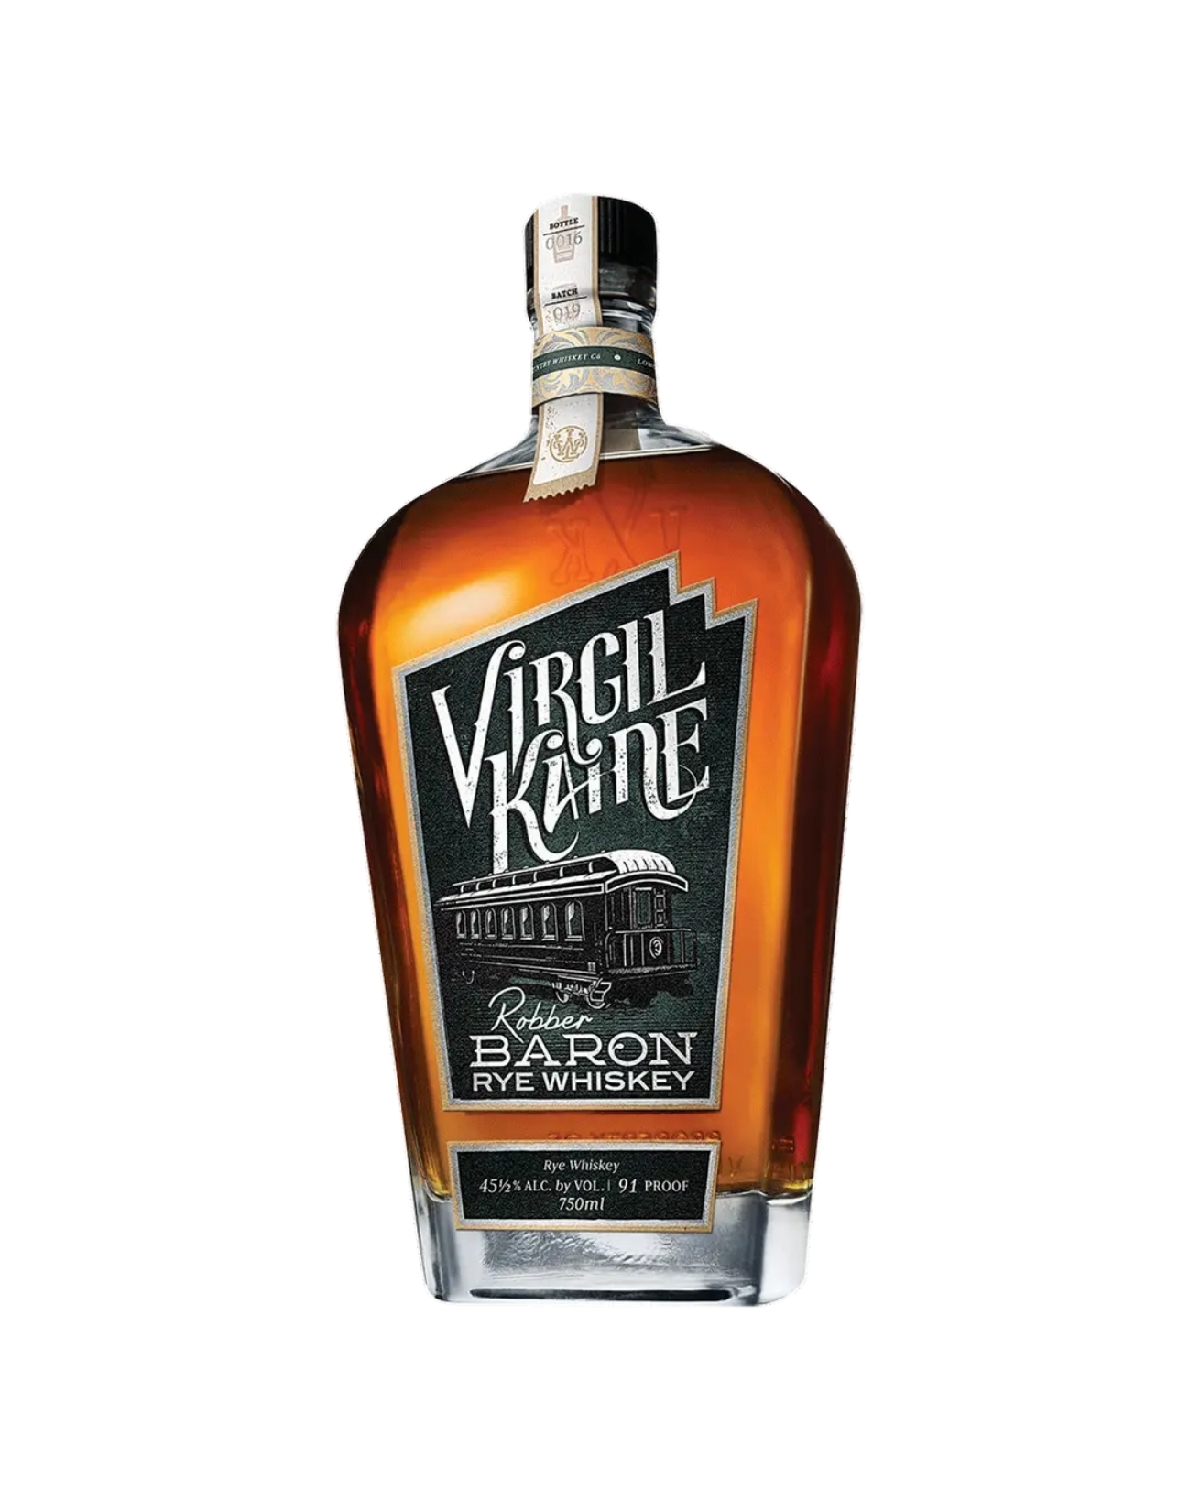 Virgil Kaine Baron Rye Whiskey 750ml